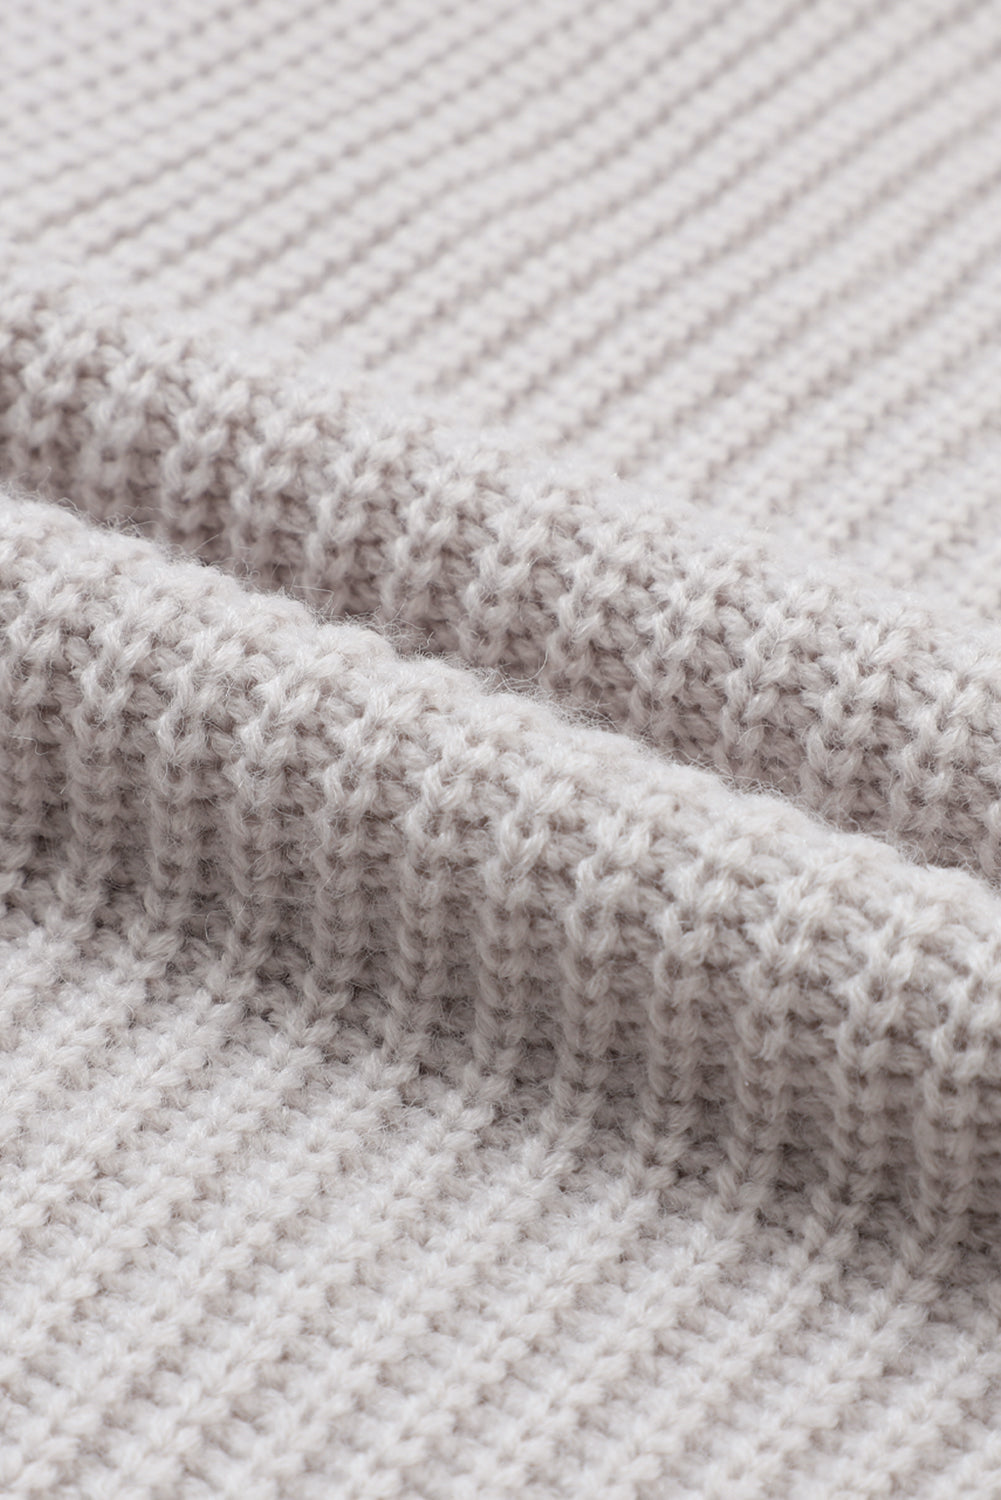 Gray Oversized Fold Over Sleeve Sweater Cardigan - SELFTRITSS